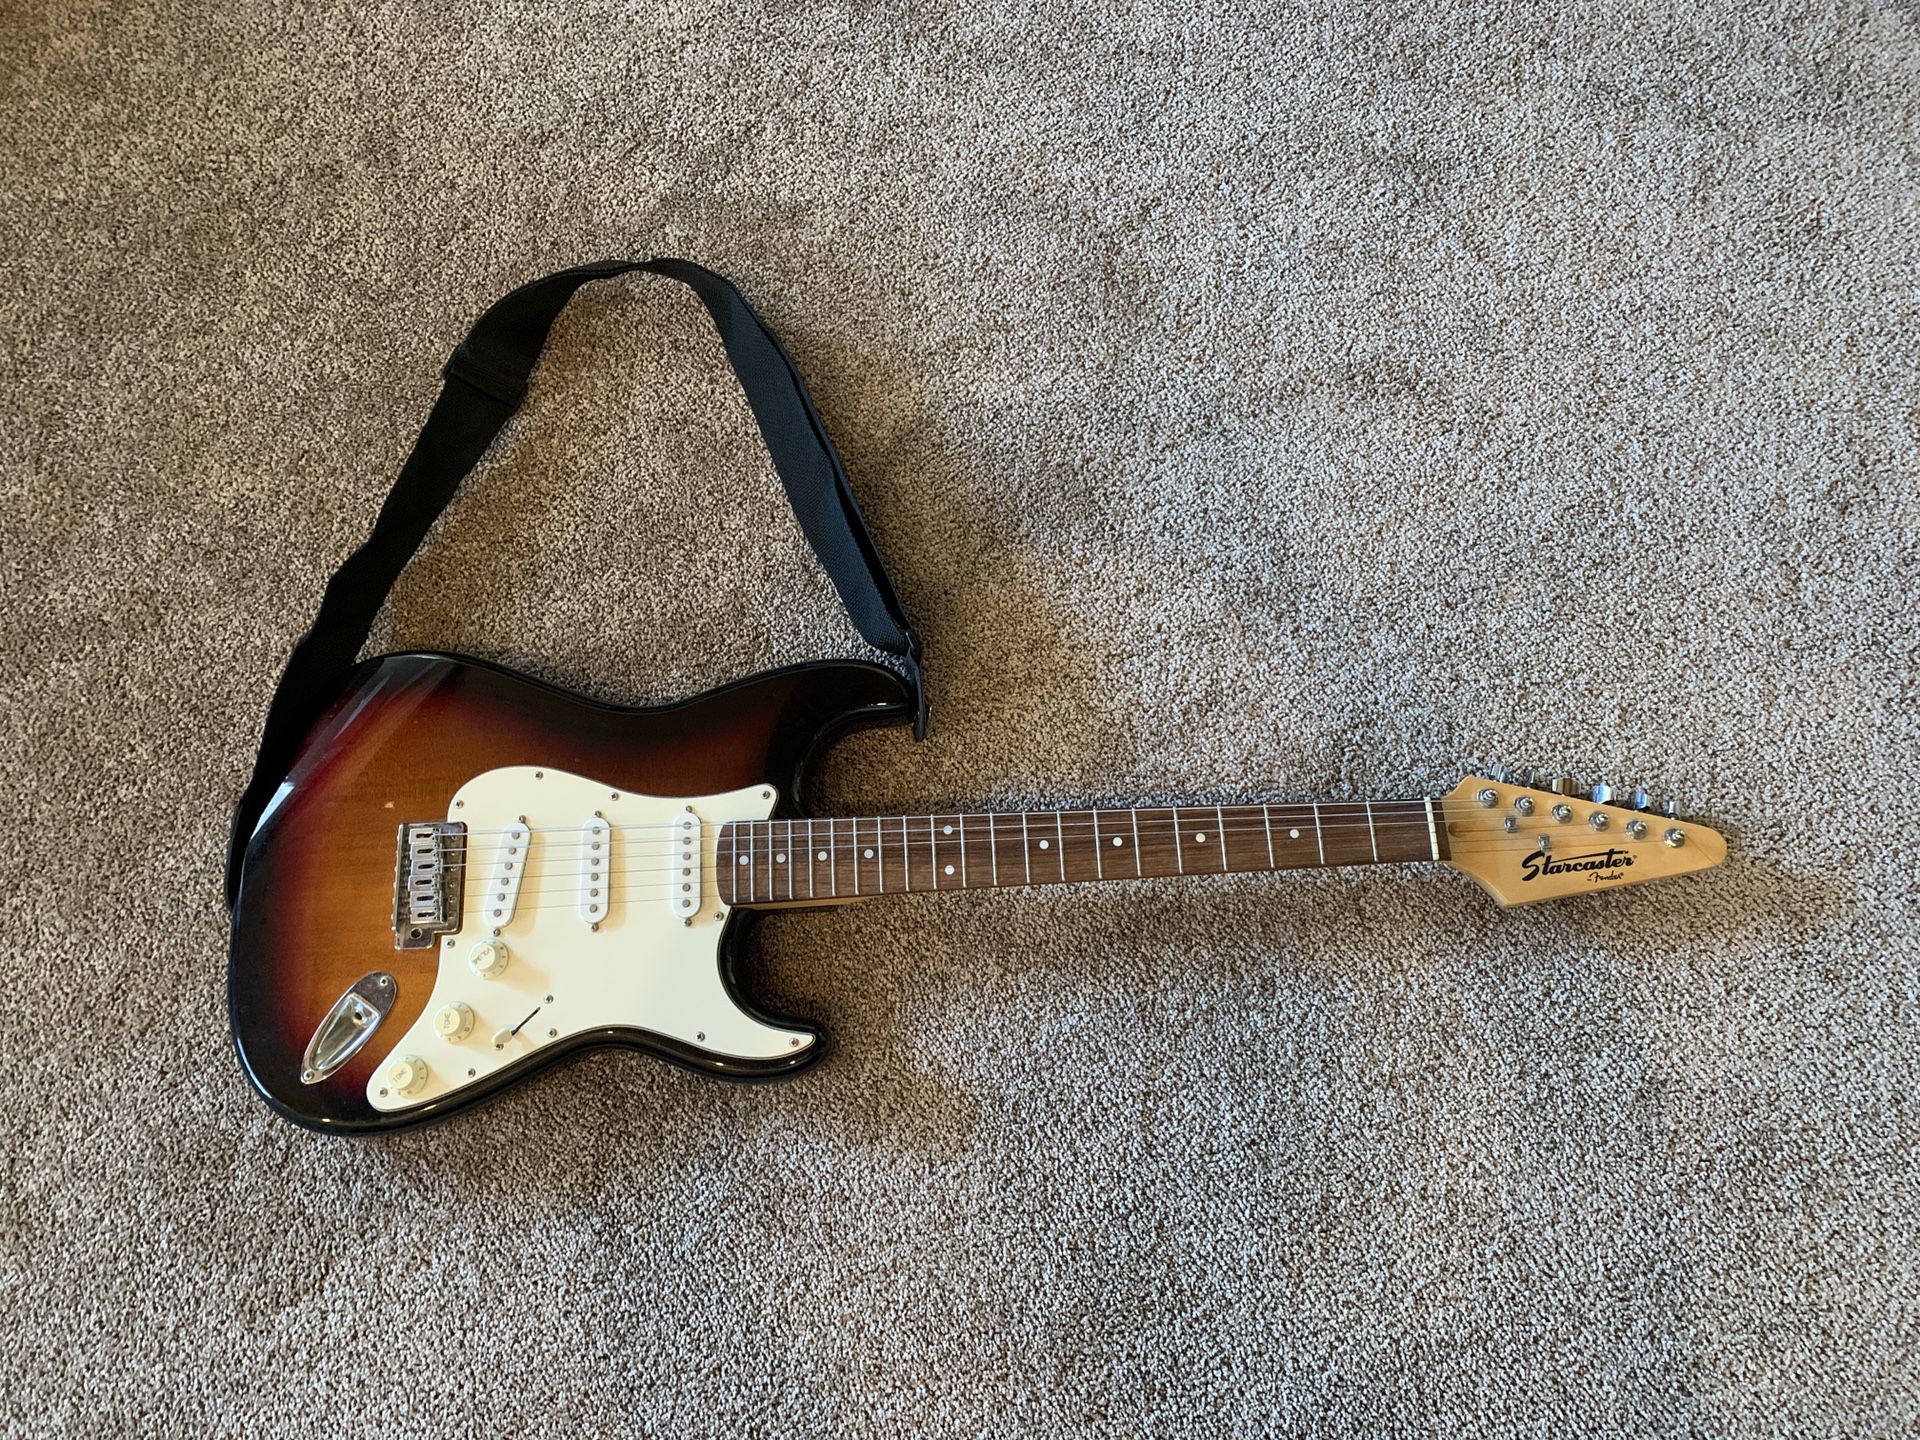 Fender guitar, case, and amp